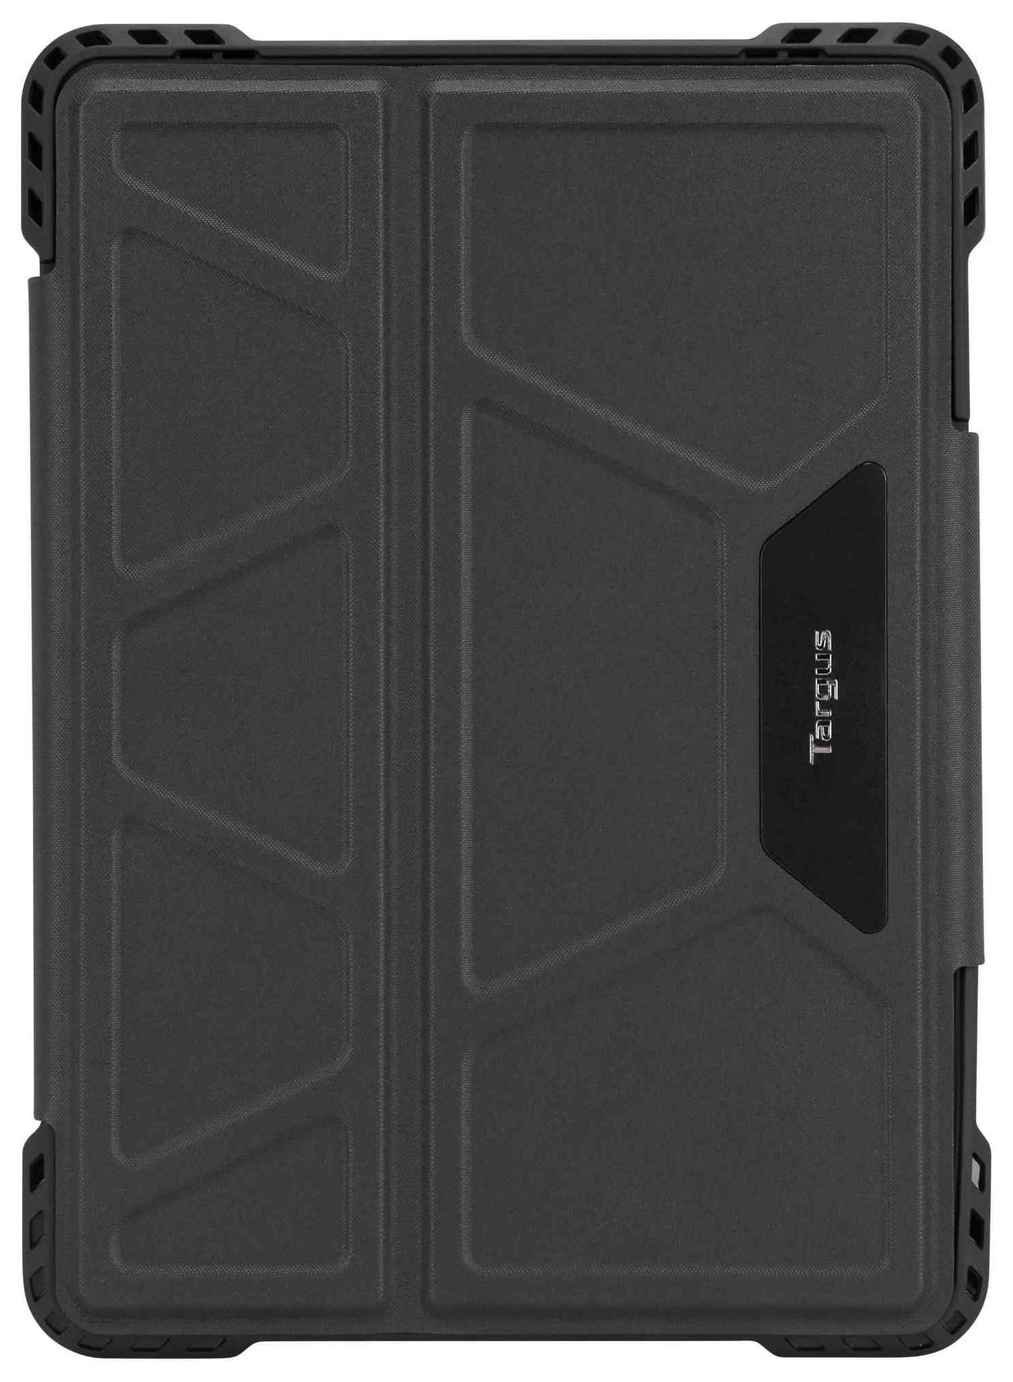 Targus Pro-Tek iPad Air 1/2 Tablet Case review